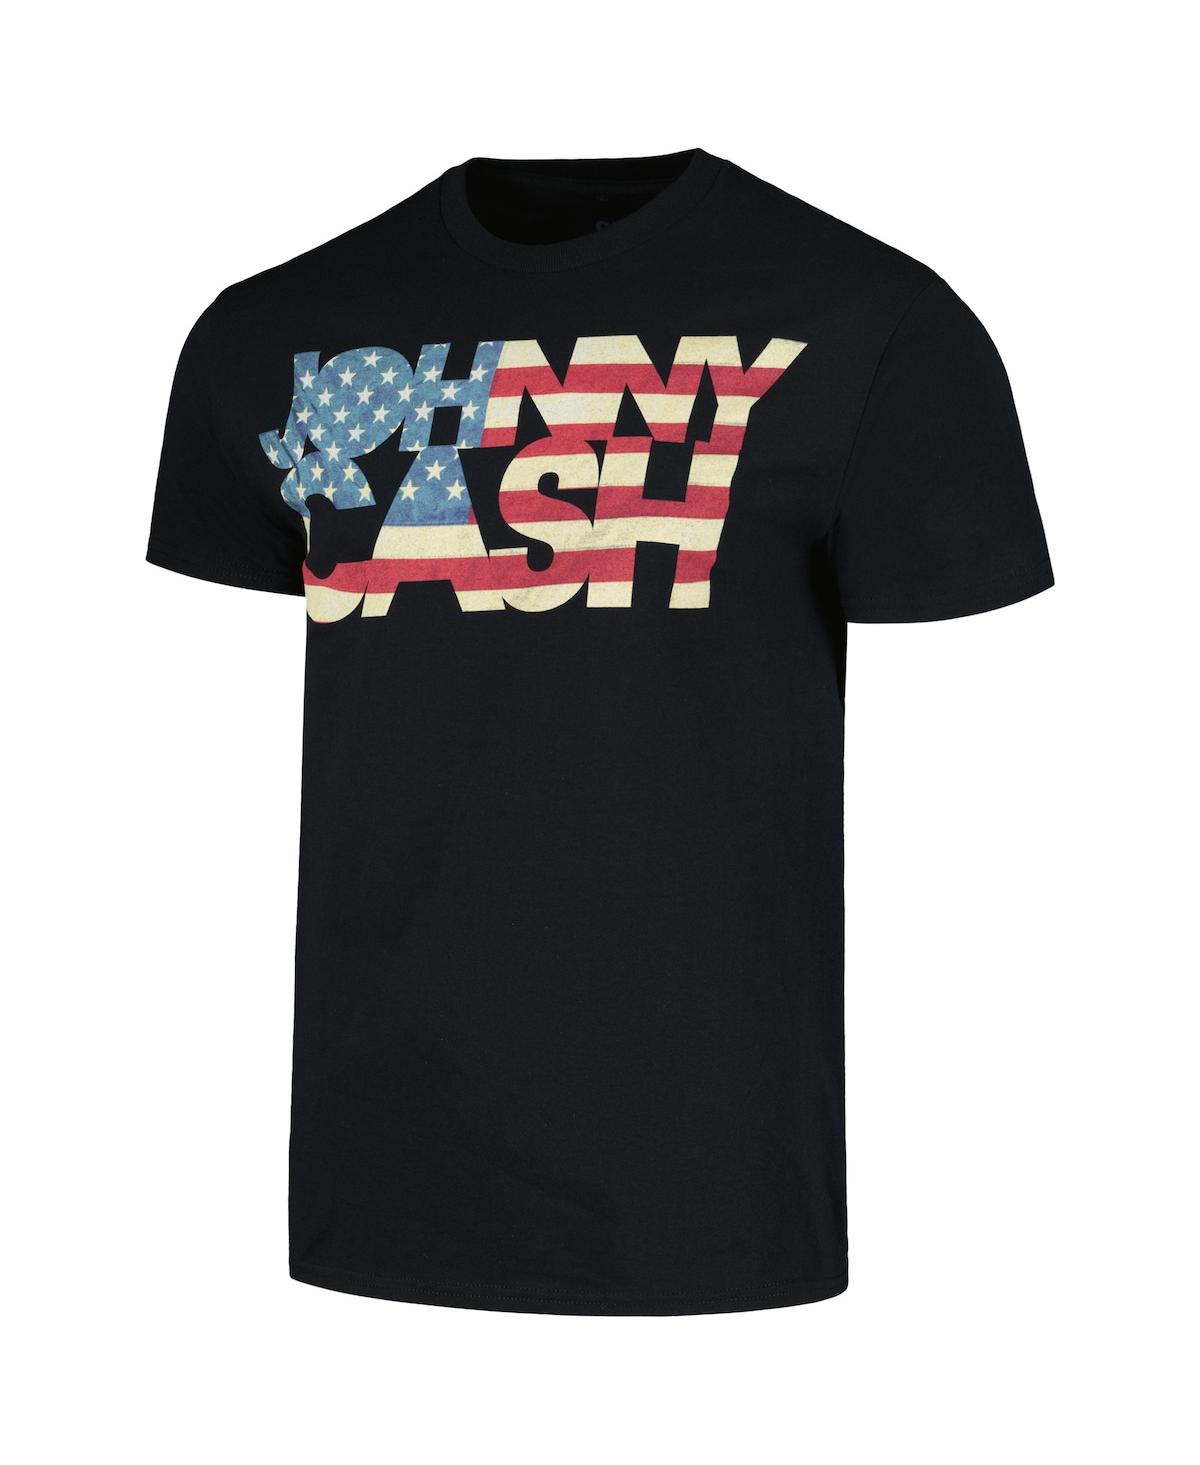 Shop Merch Traffic Men's And Women's Black Johnny Cash Ragged Old Flag T-shirt